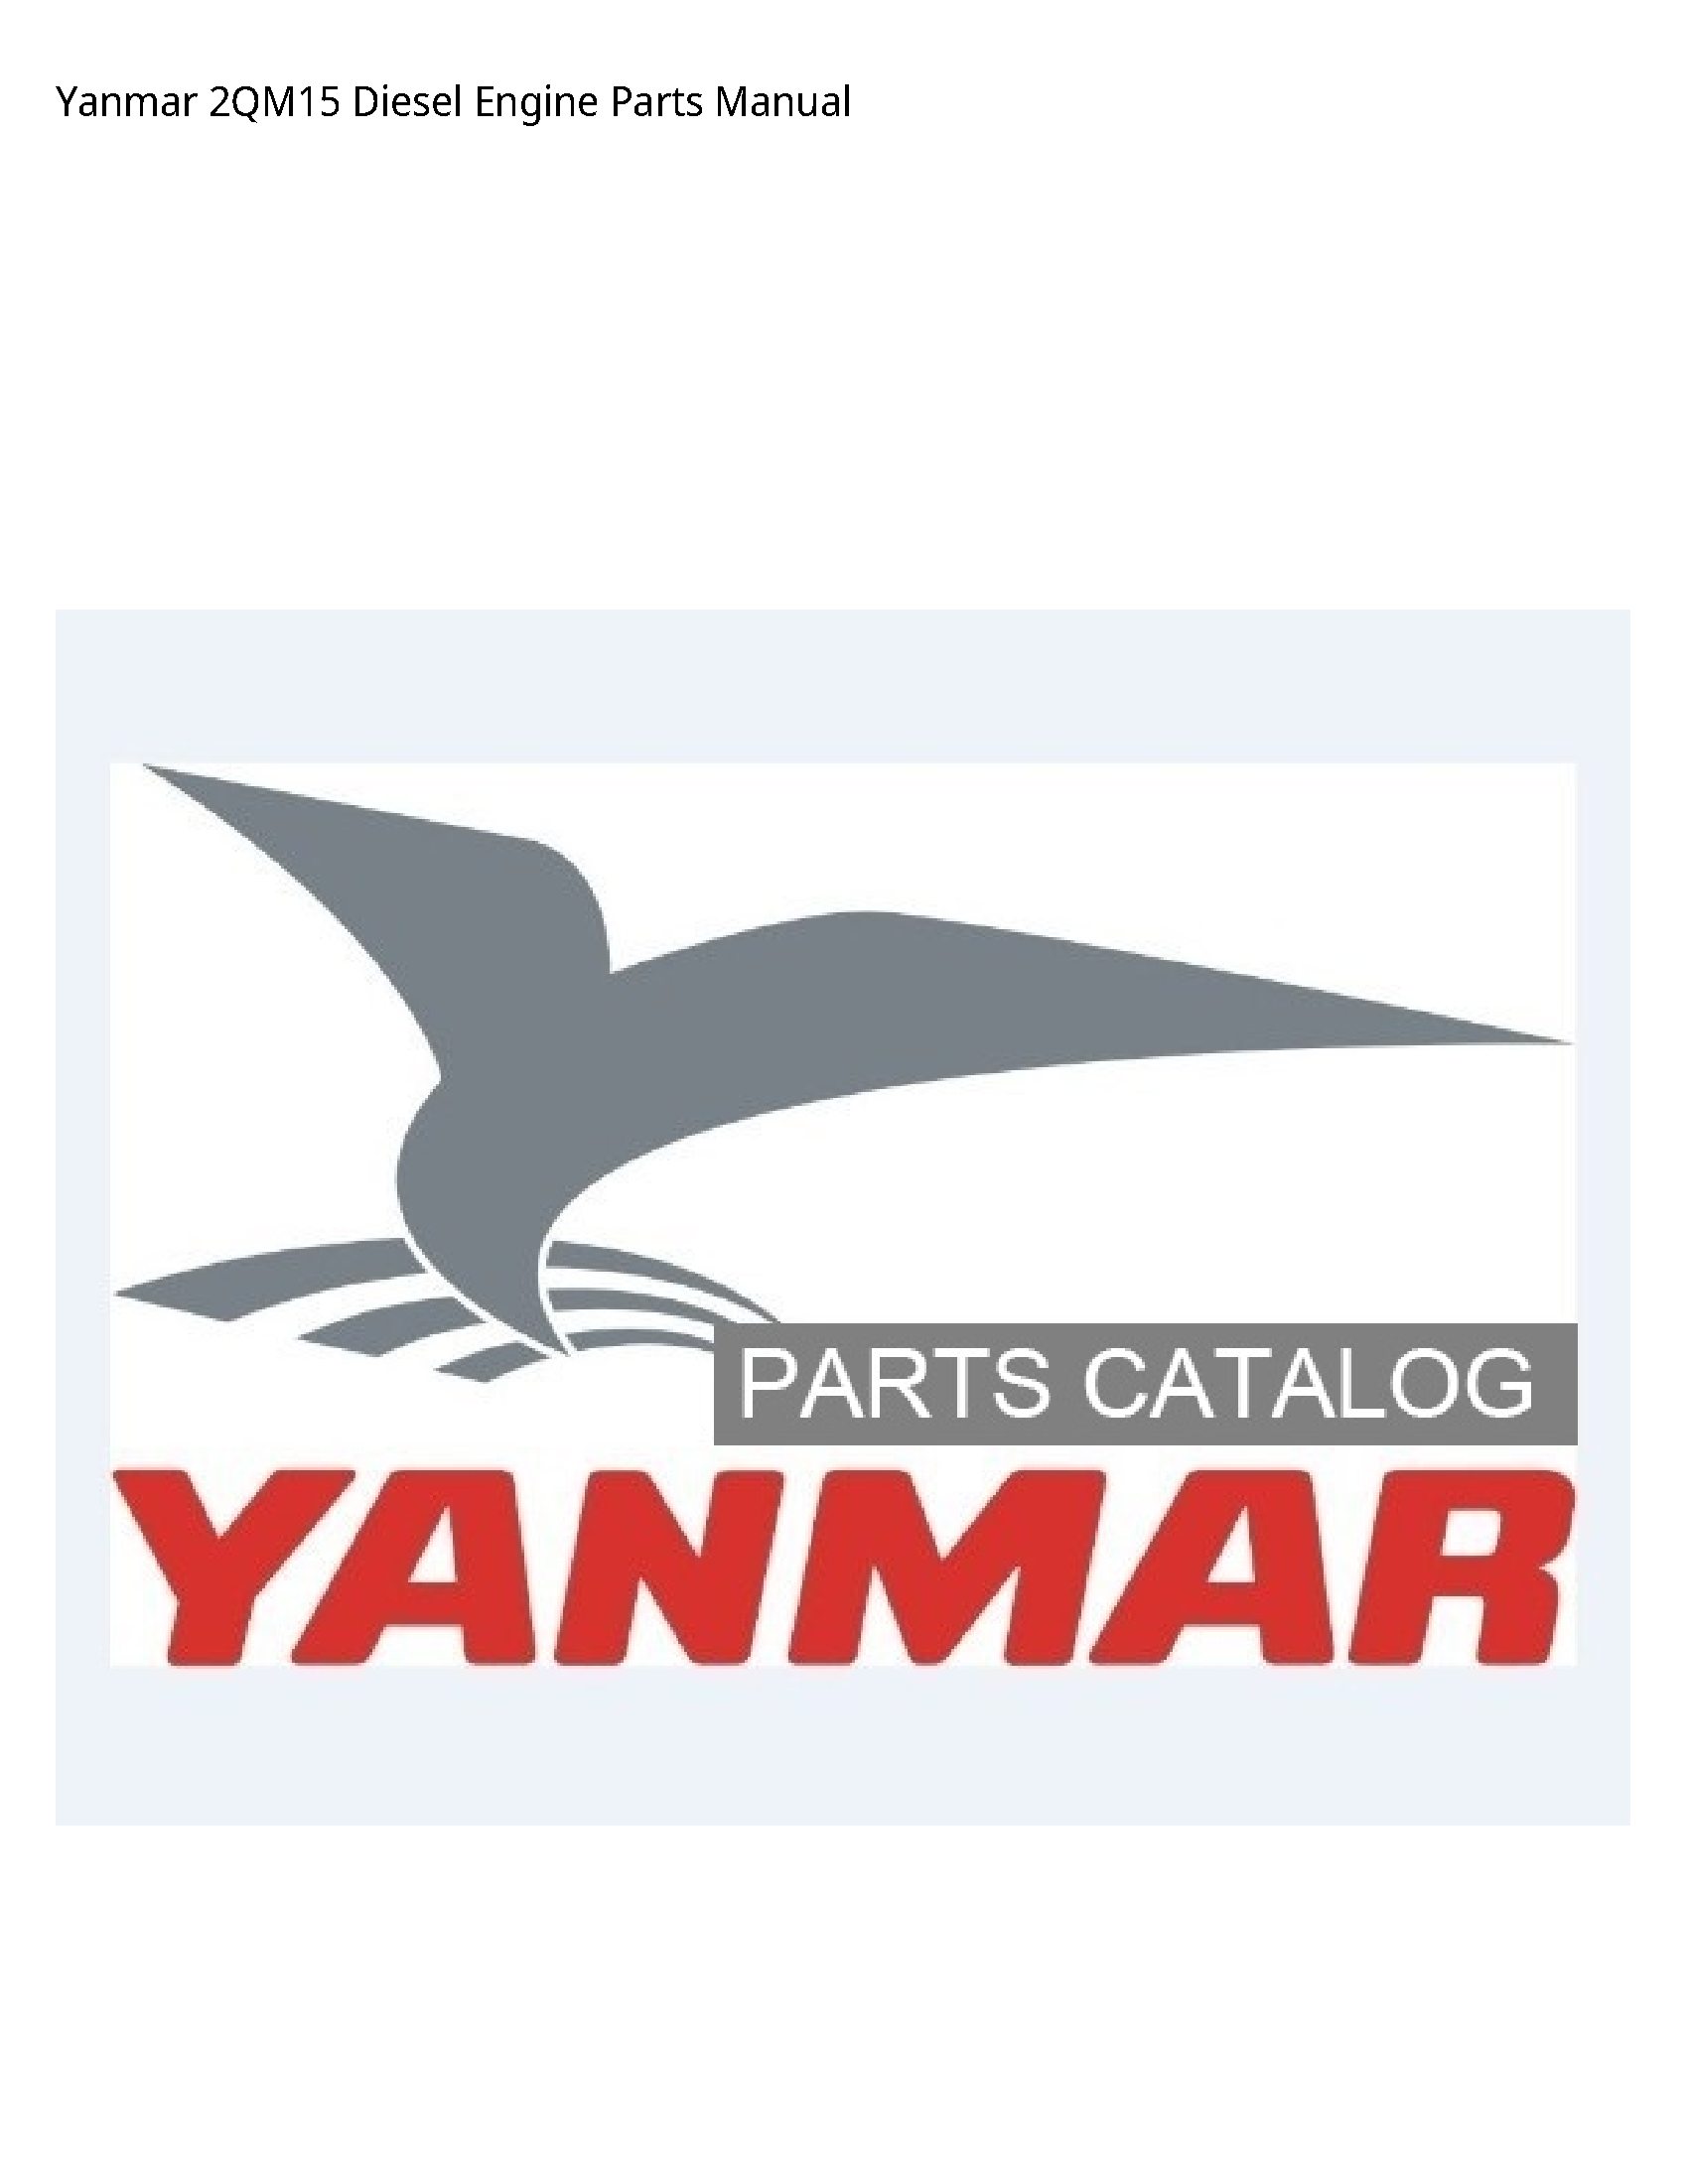 Yanmar 2QM15 Diesel Engine Parts manual